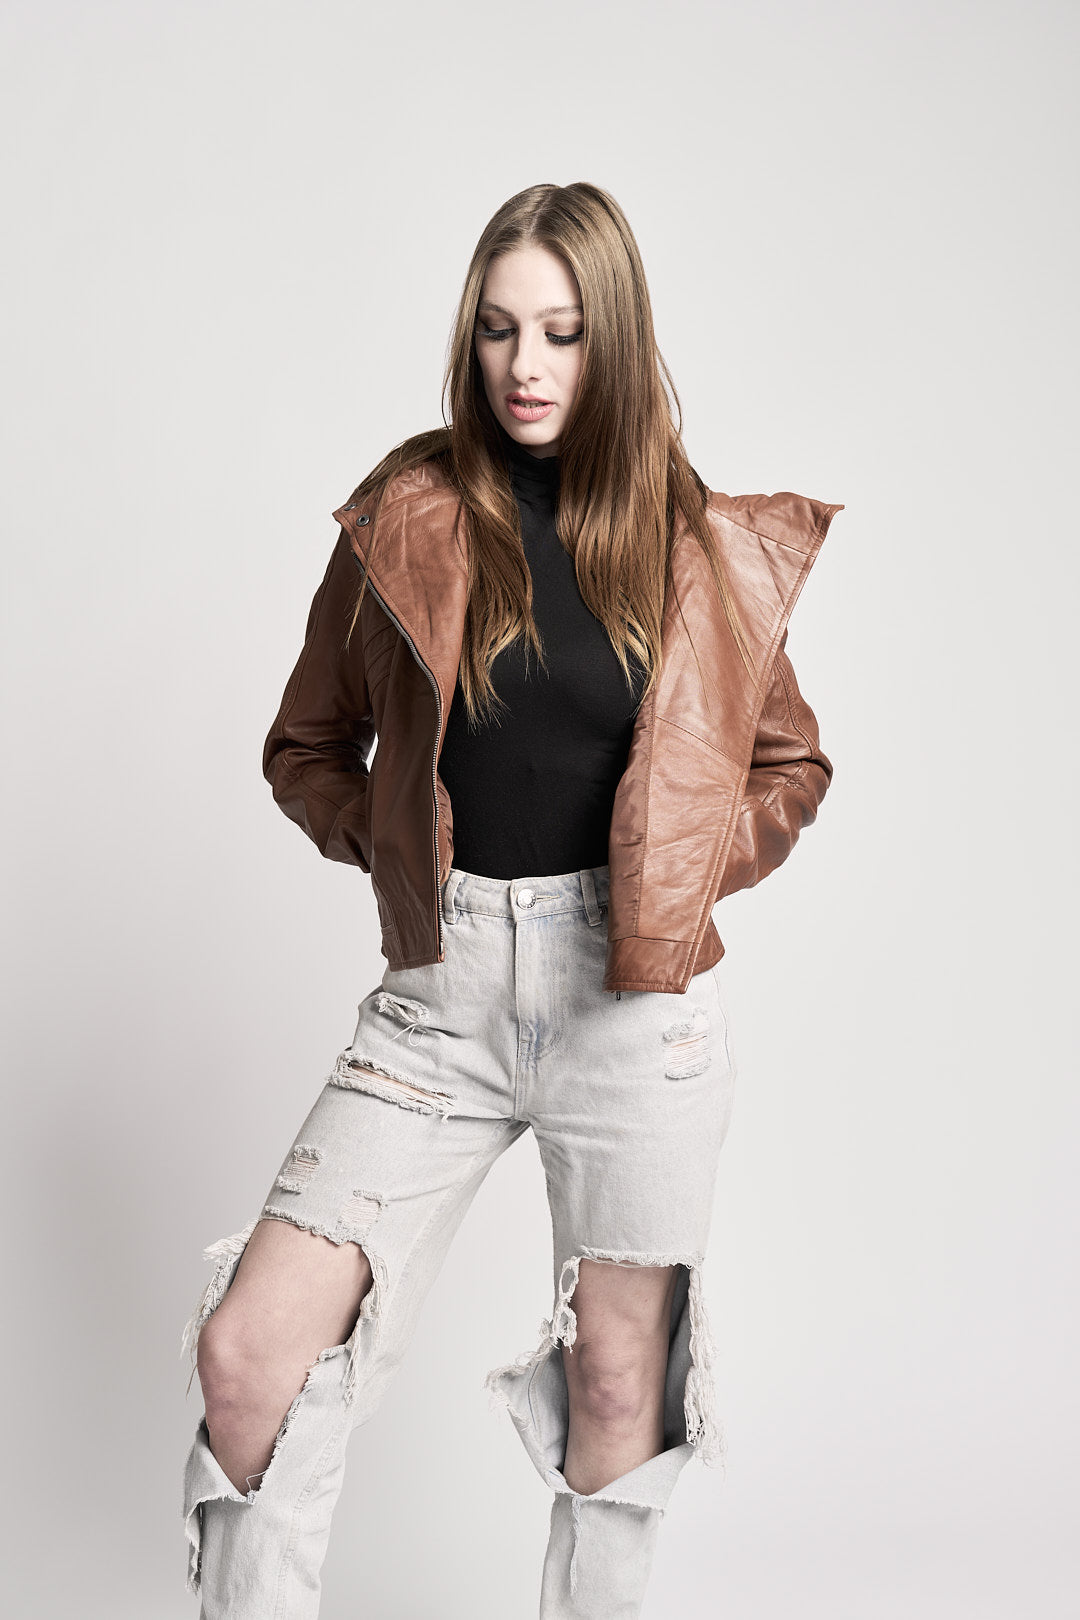 Sassy High Fashion Womens Hooded Leather Jacket